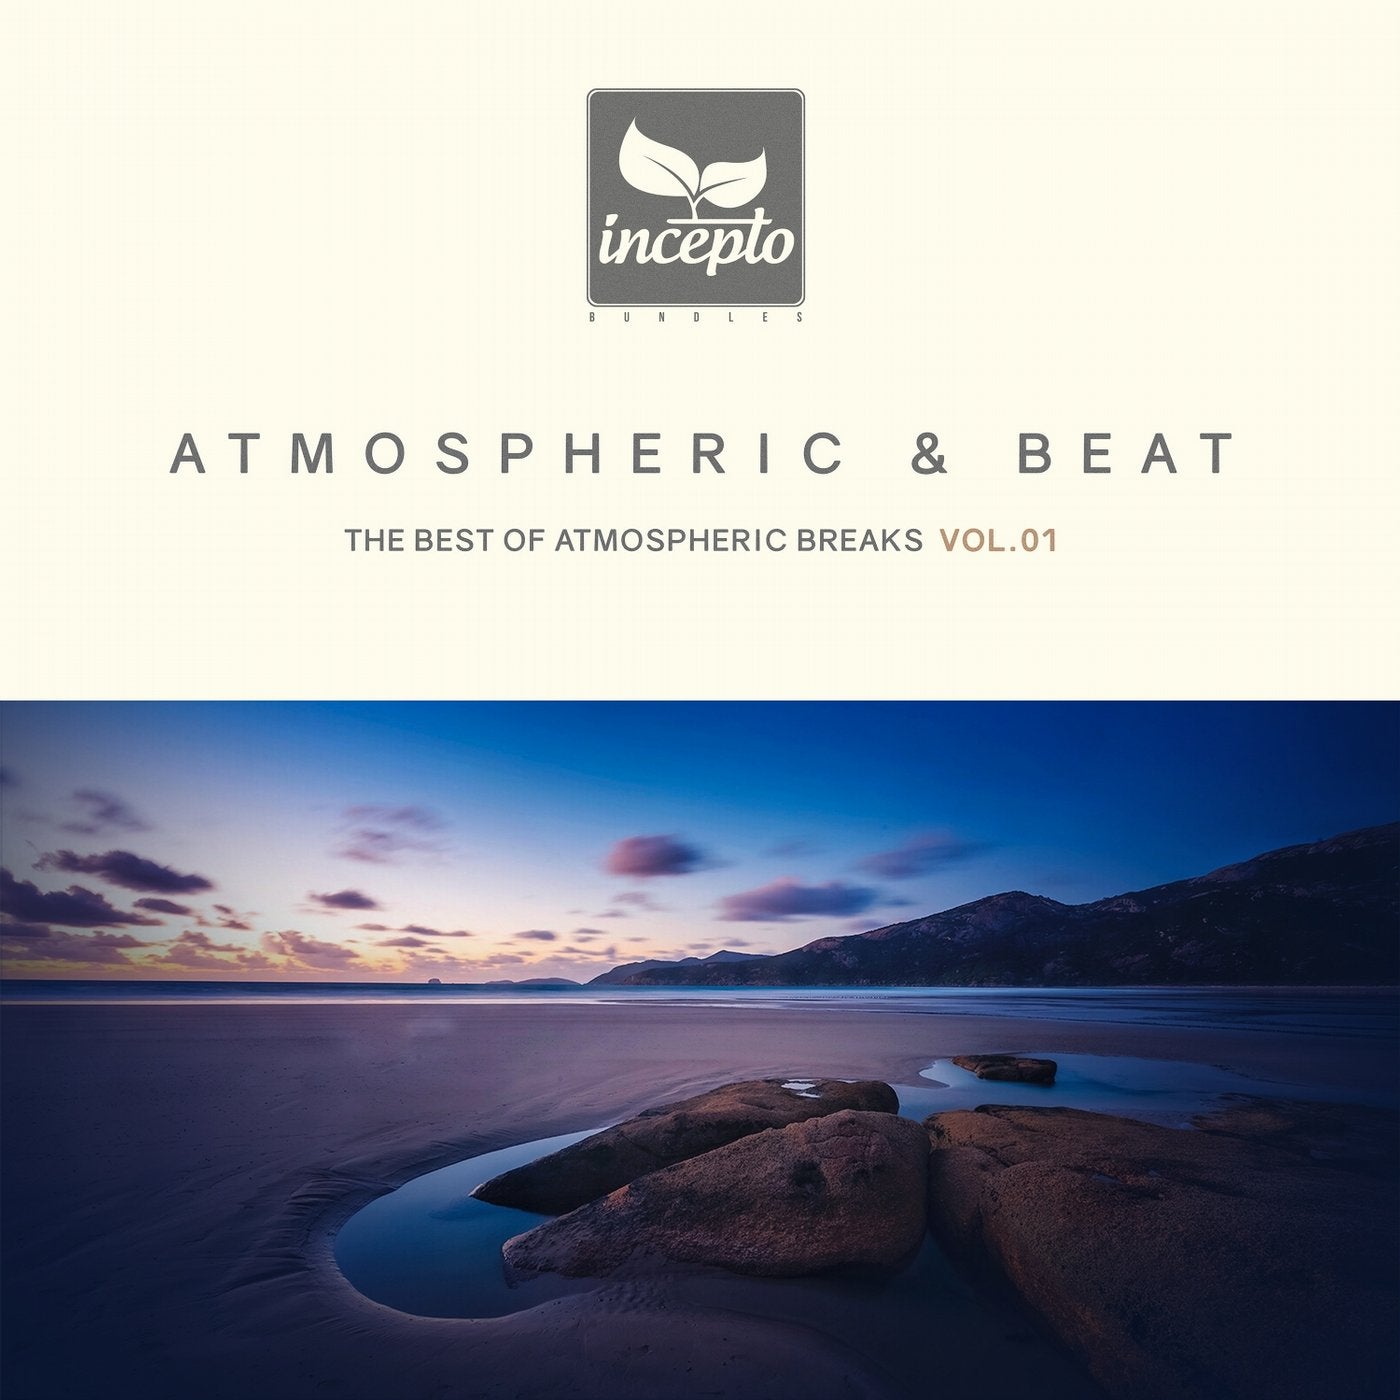 Atmospheric & Beat, Vol. 01